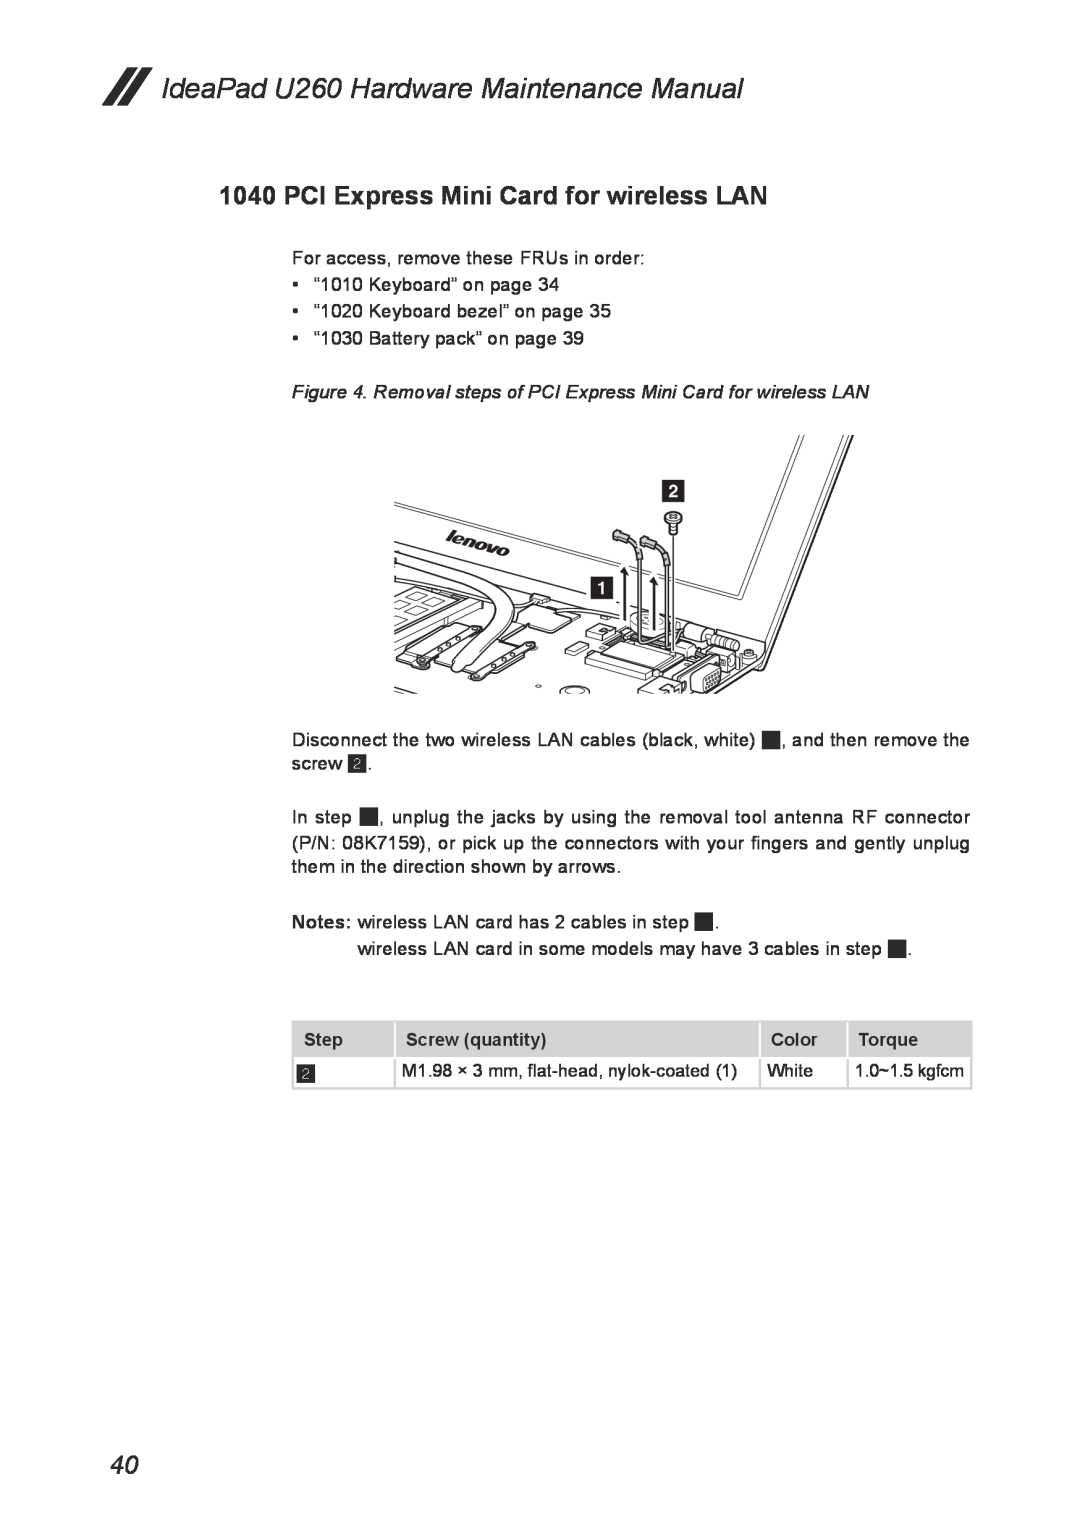 Lenovo manual Removal steps of PCI Express Mini Card for wireless LAN, IdeaPad U260 Hardware Maintenance Manual 